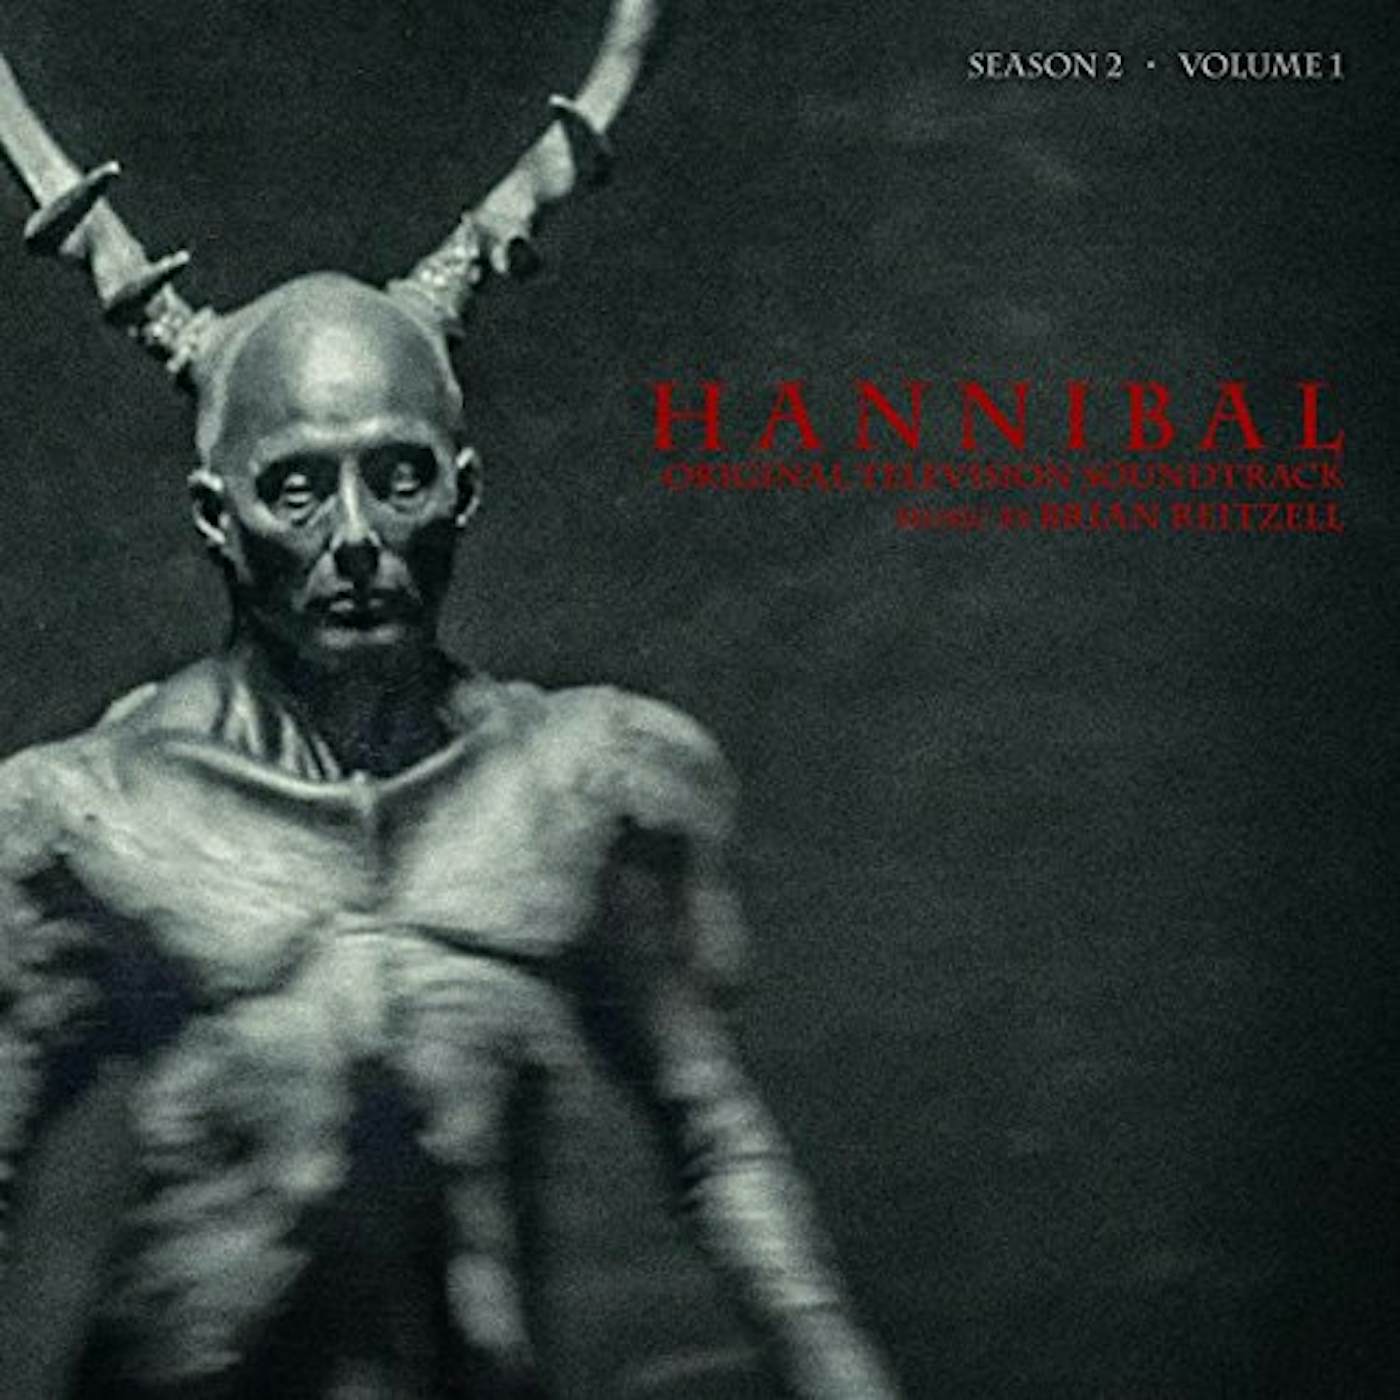 Brian Reitzell HANNIBAL: SEASON 2 - VOL 1 / Original Soundtrack Vinyl Record